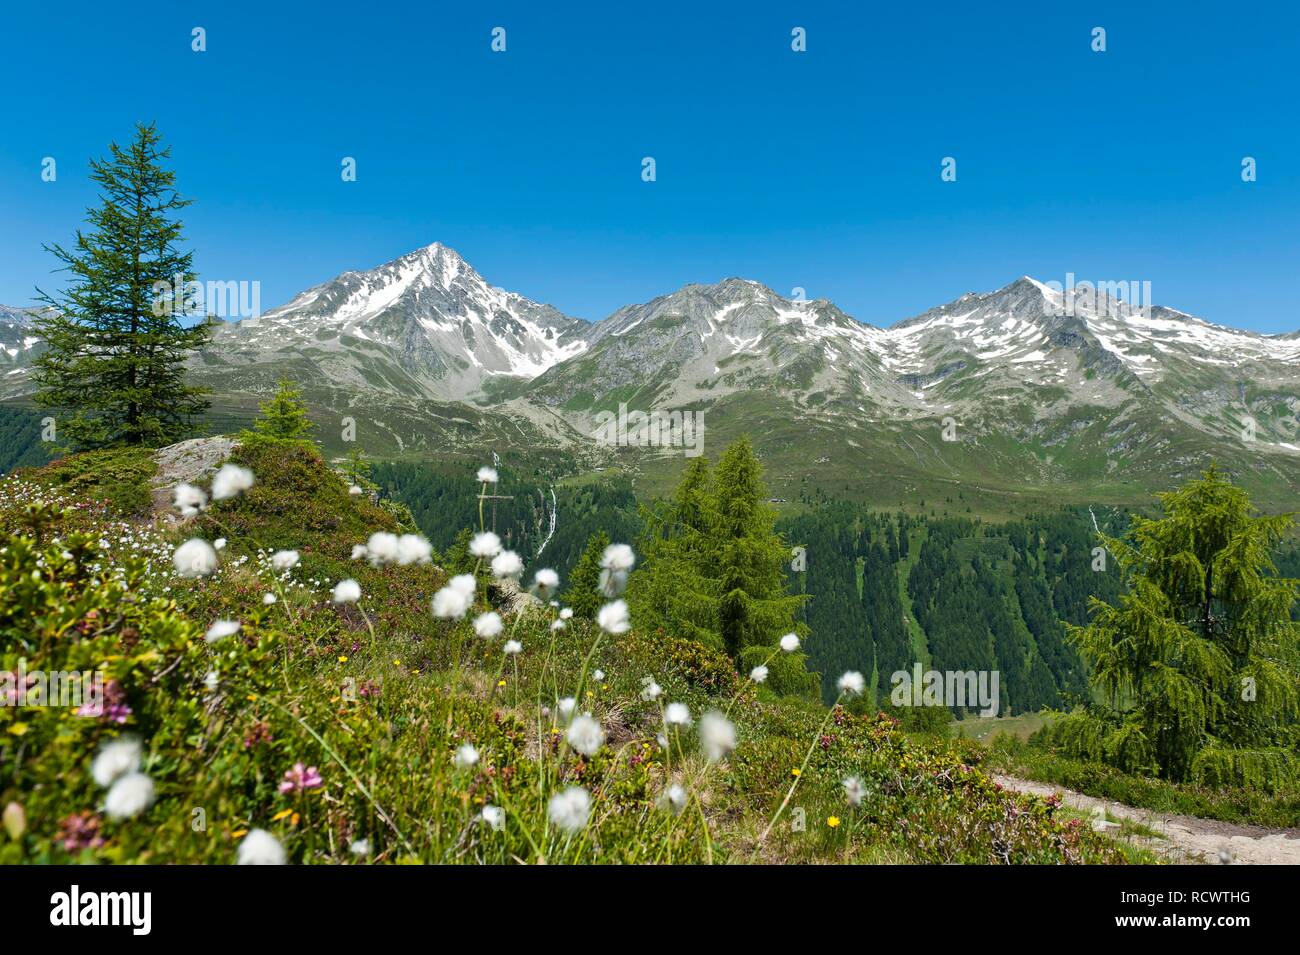 Cottongrass (Eriophorum), rear Rauhkofel, Rauchkofel 3251 m, Monte Fumo, Ahrntal, Valle Aurina, South Tyrol, Alto Adige, Italy Stock Photo